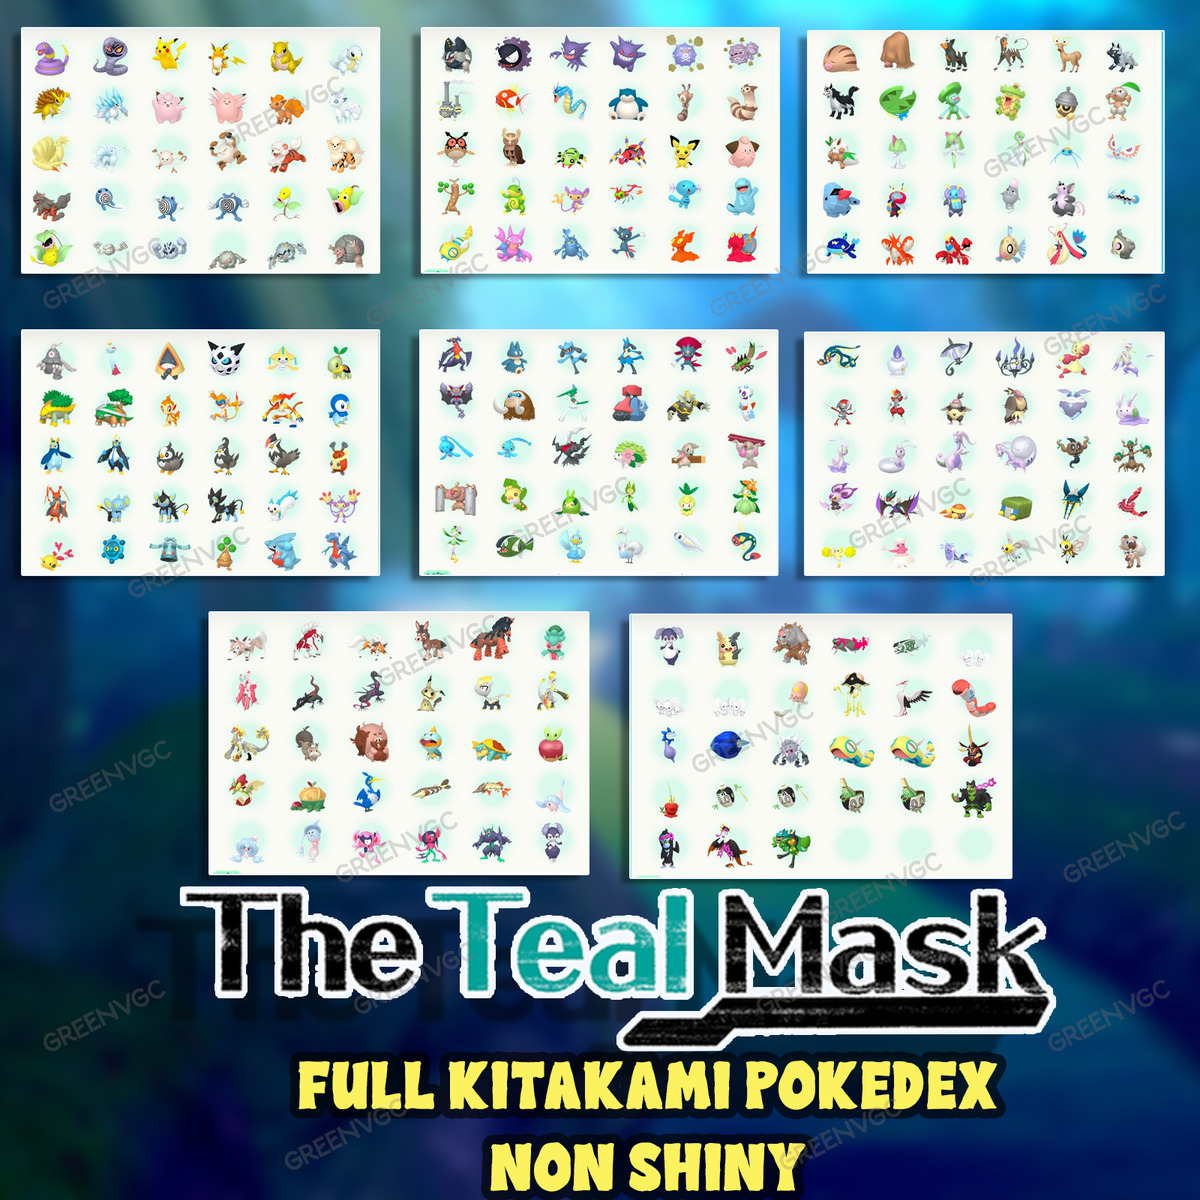 Complete Teal Mask DLC Pokedex Pokemon Home 6IV Shiny Pokemon Scarlet and  Violet